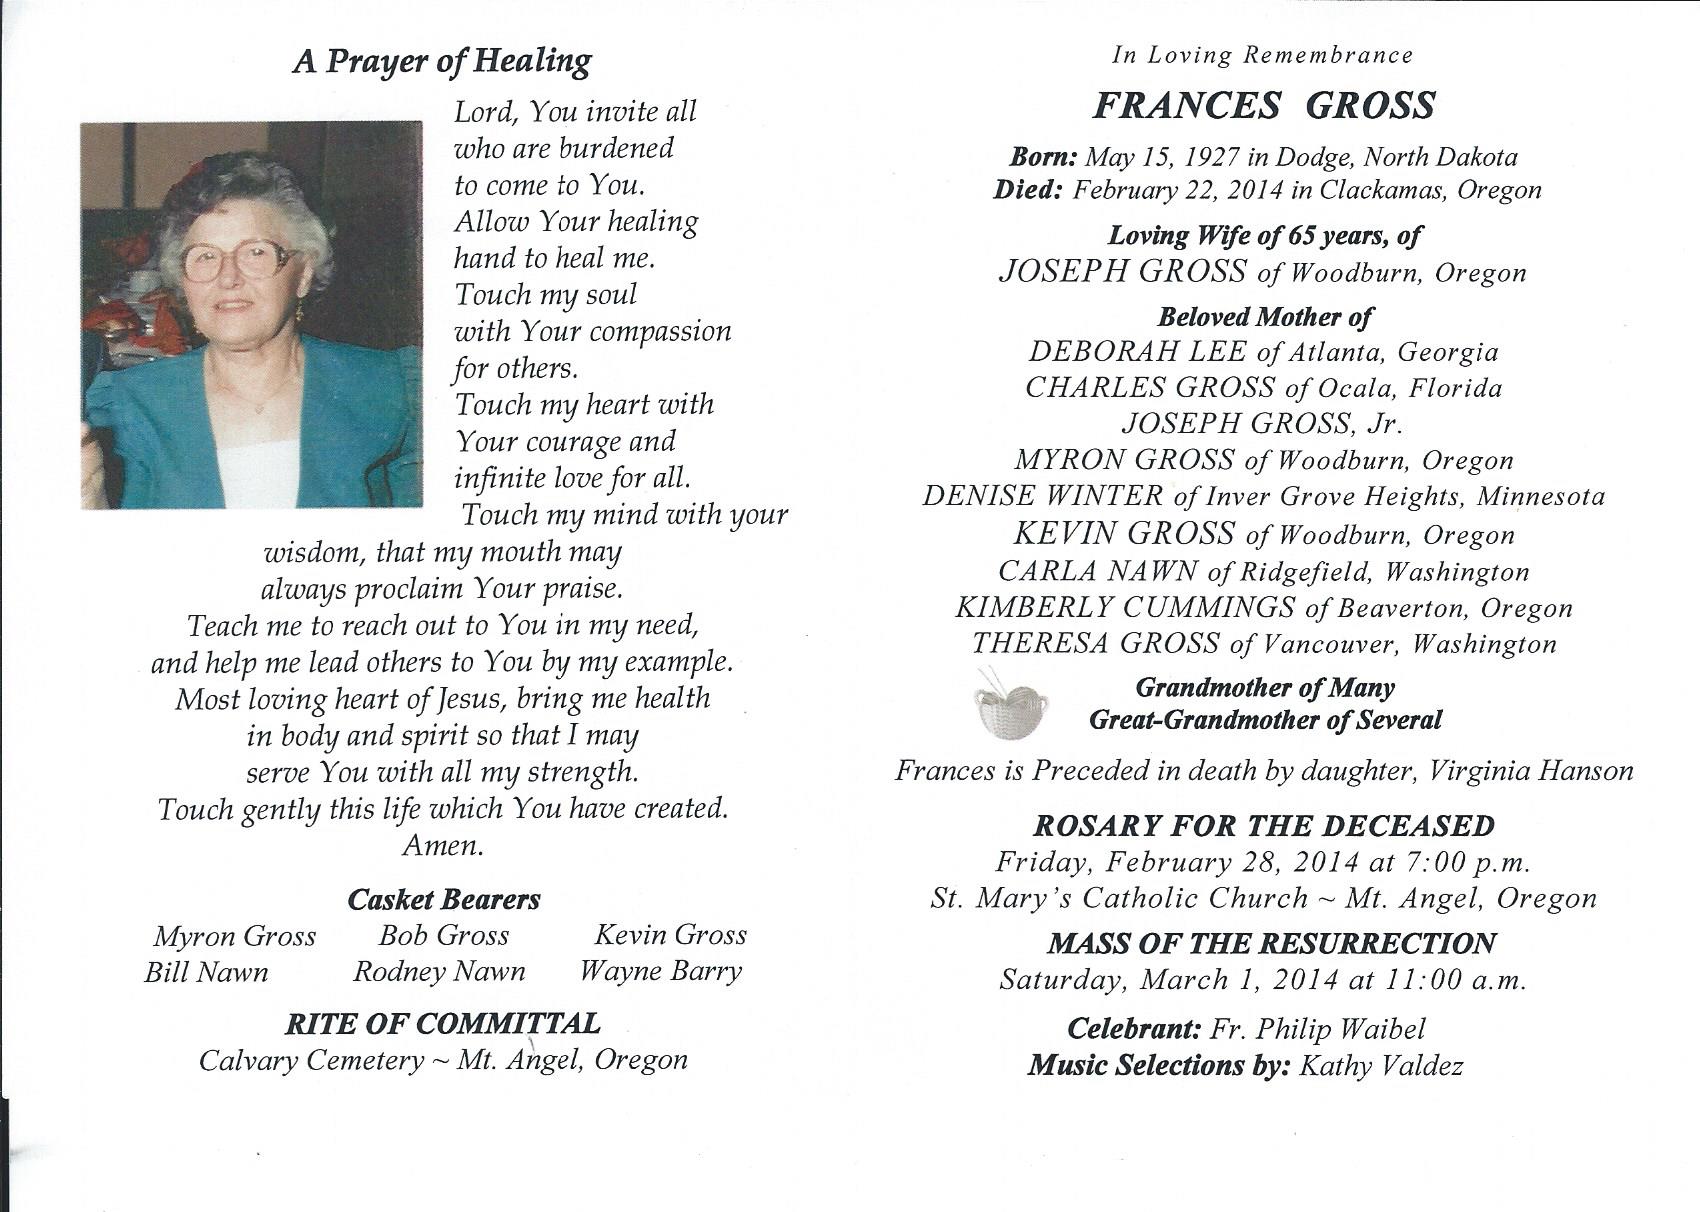 February 22, 2014 Frances obit card.